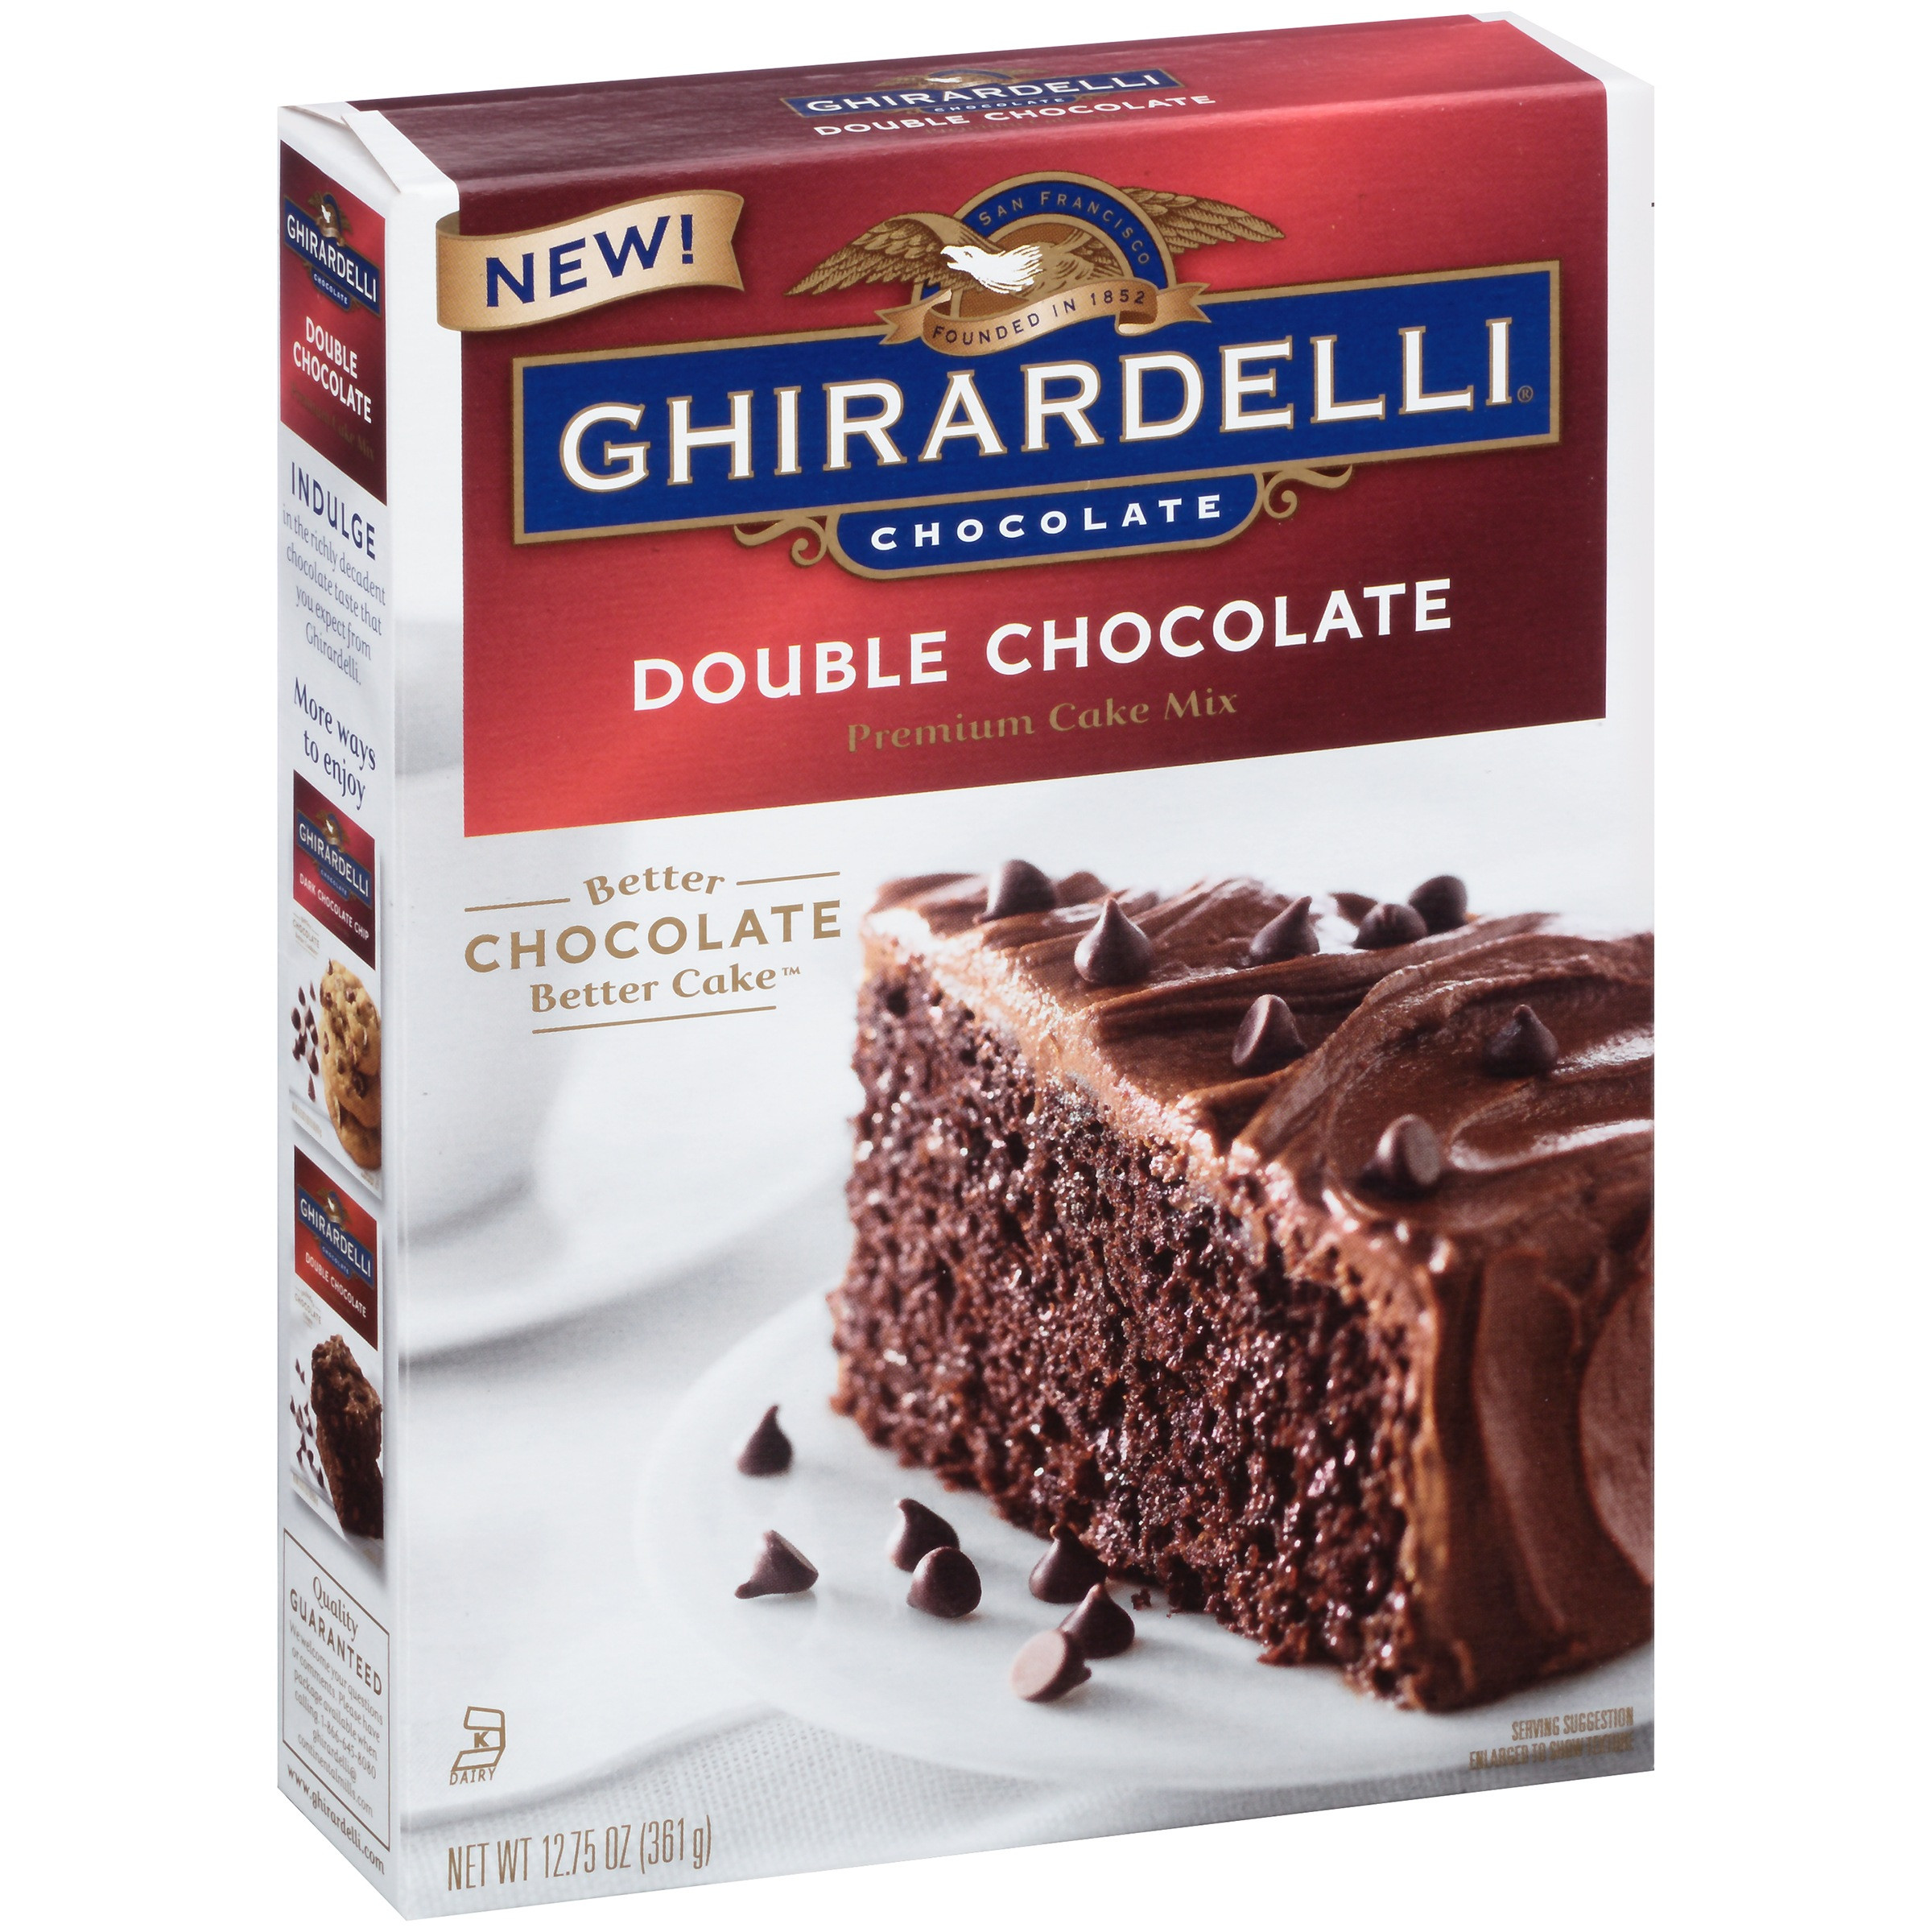 Ghirardelli Chocolate Cake
 ghirardelli chocolate cake mix recipe